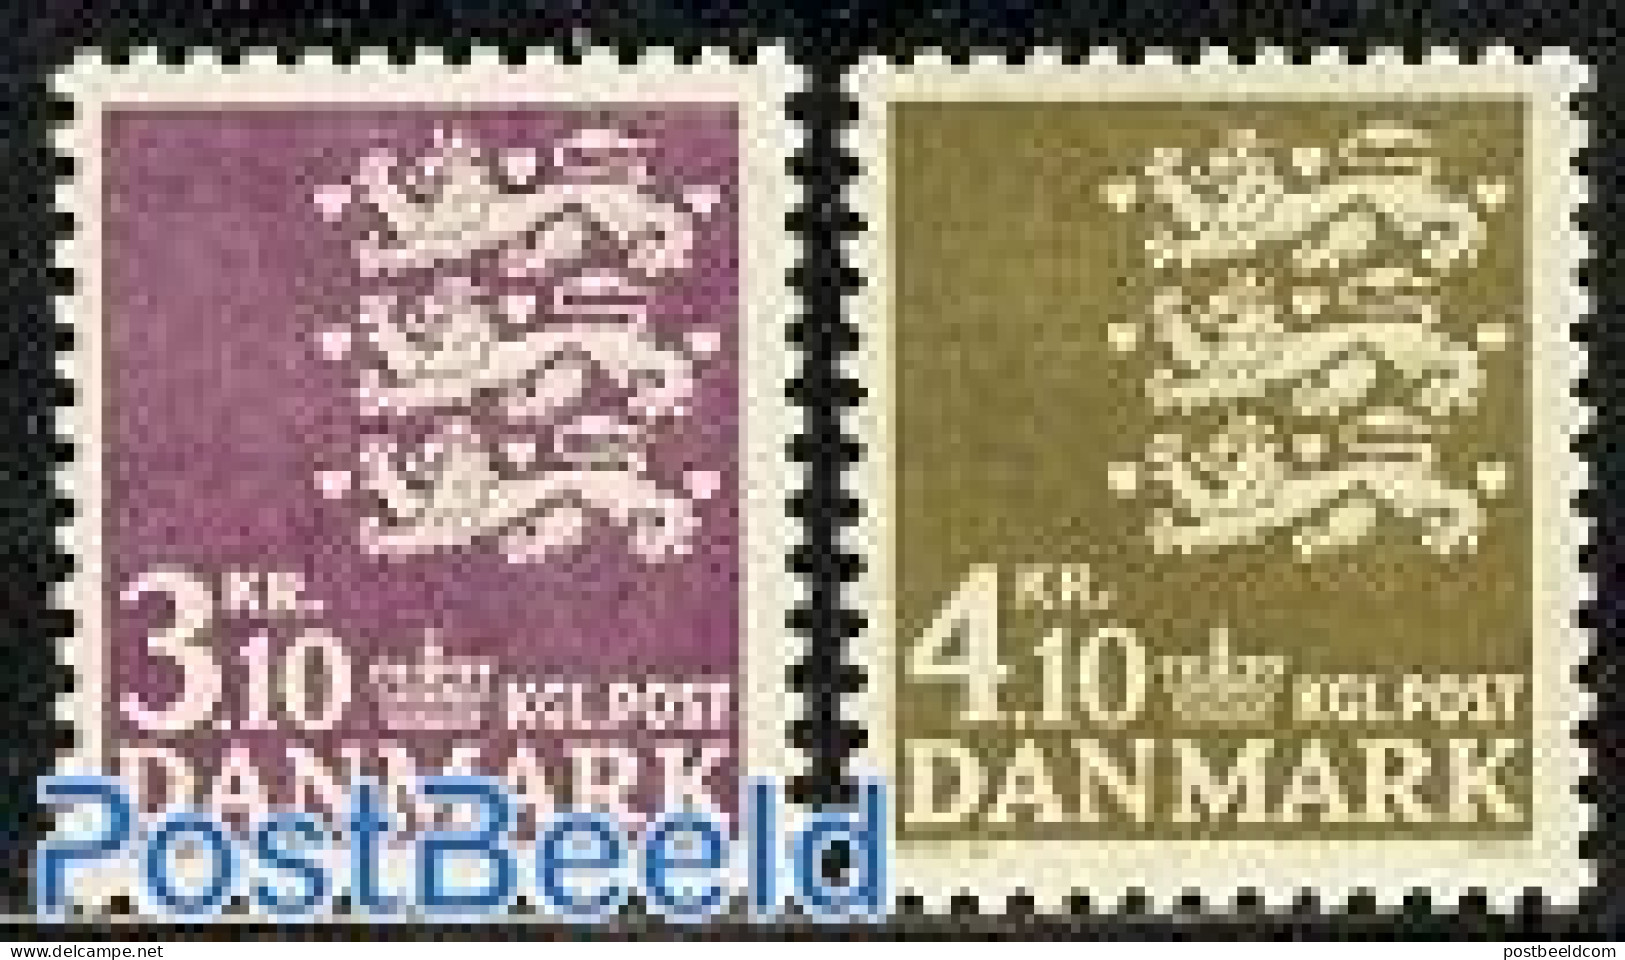 Denmark 1970 Definitives 2v, Mint NH - Ungebraucht